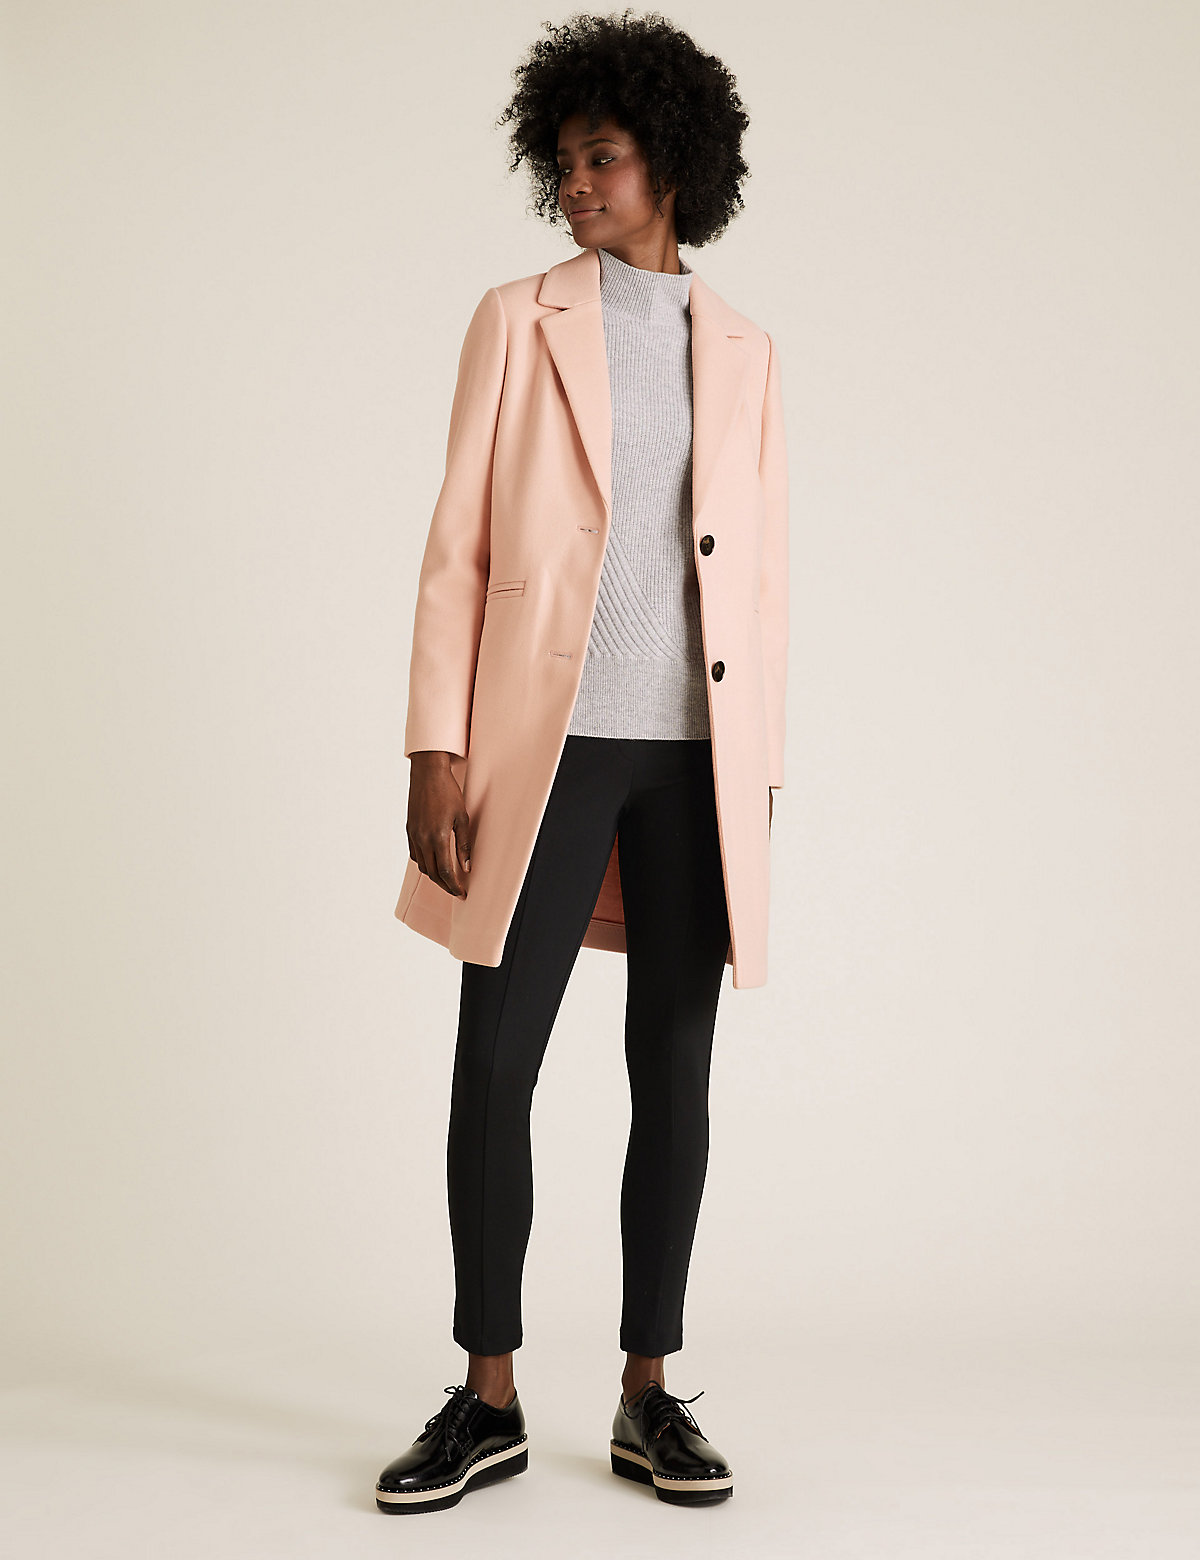 Женская верхняя одежда Marks & Spencer Вязаный кардиган-пальто с карманами, Marks&Spencer